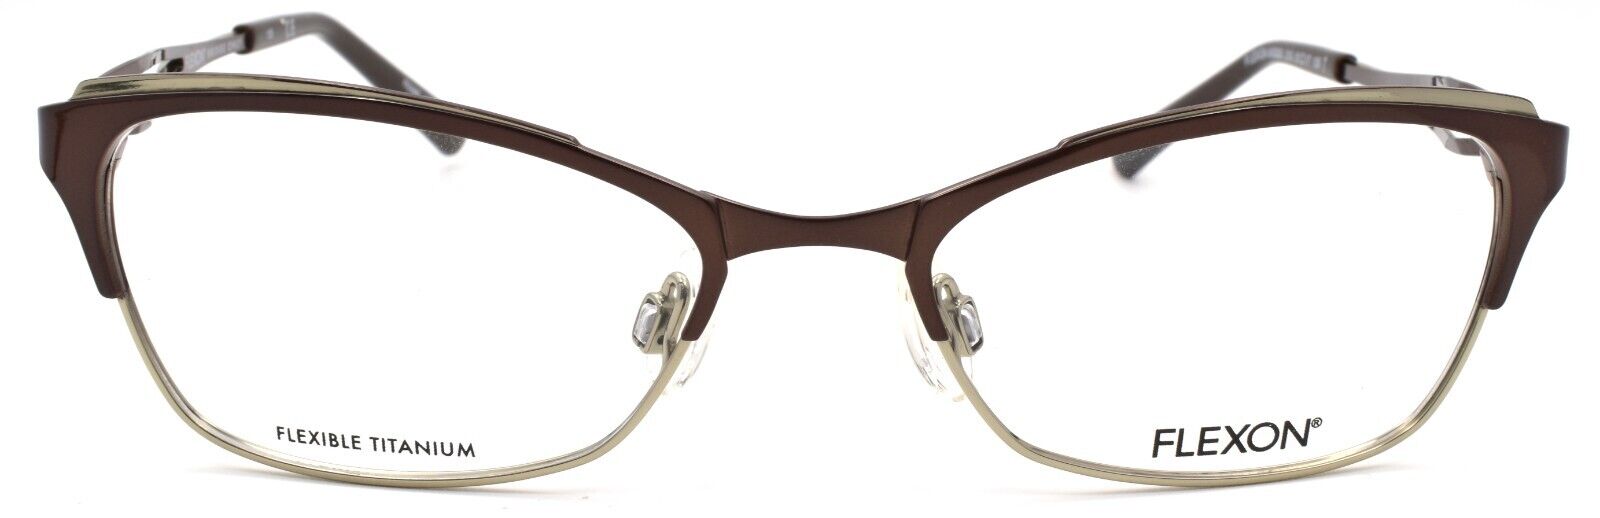 2-Flexon W3000 210 Women's Eyeglasses Frames Brown 51-17-135 Titanium Bridge-883900202824-IKSpecs